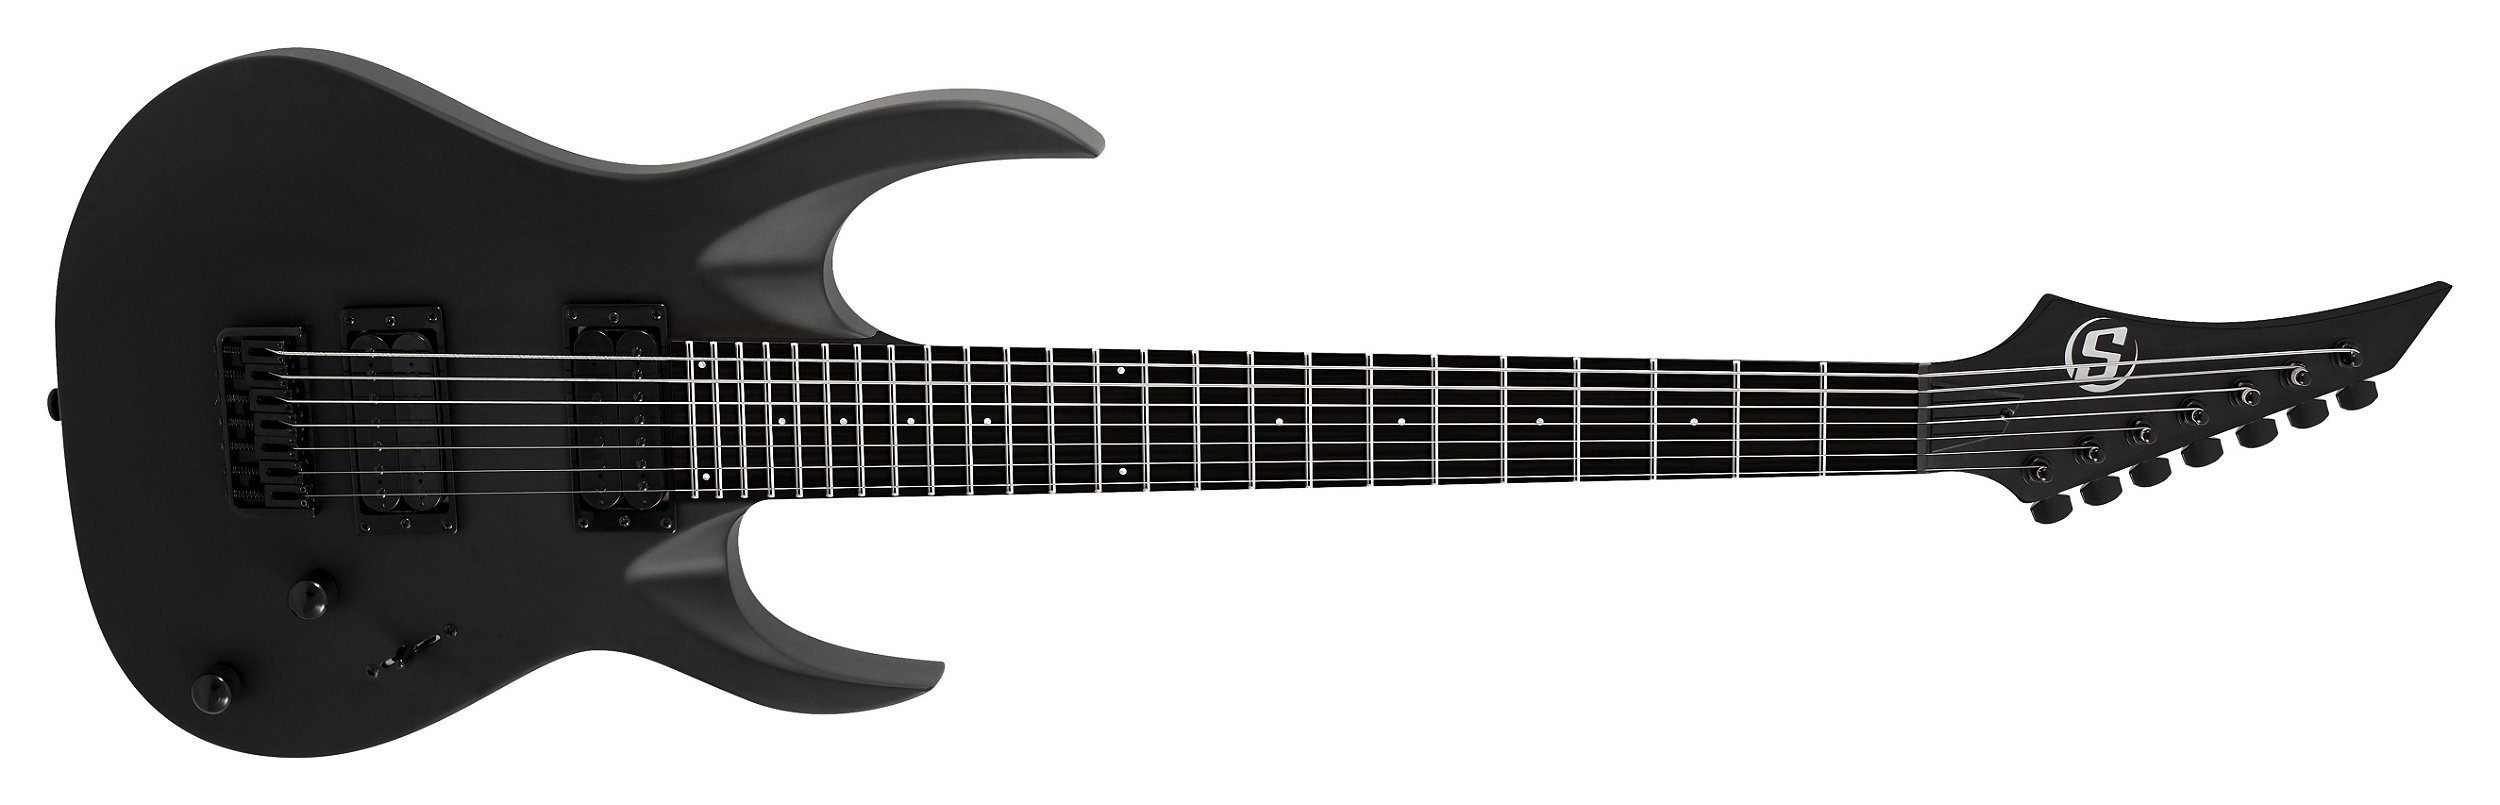 Guitarra 7 Cordas S by Solar AB4.7C preto carbono fosca - Norris Imports:  Solar Guitars, S by Solar, Tribe basses, Electric eye audio, Blacksmith  stringsetc.